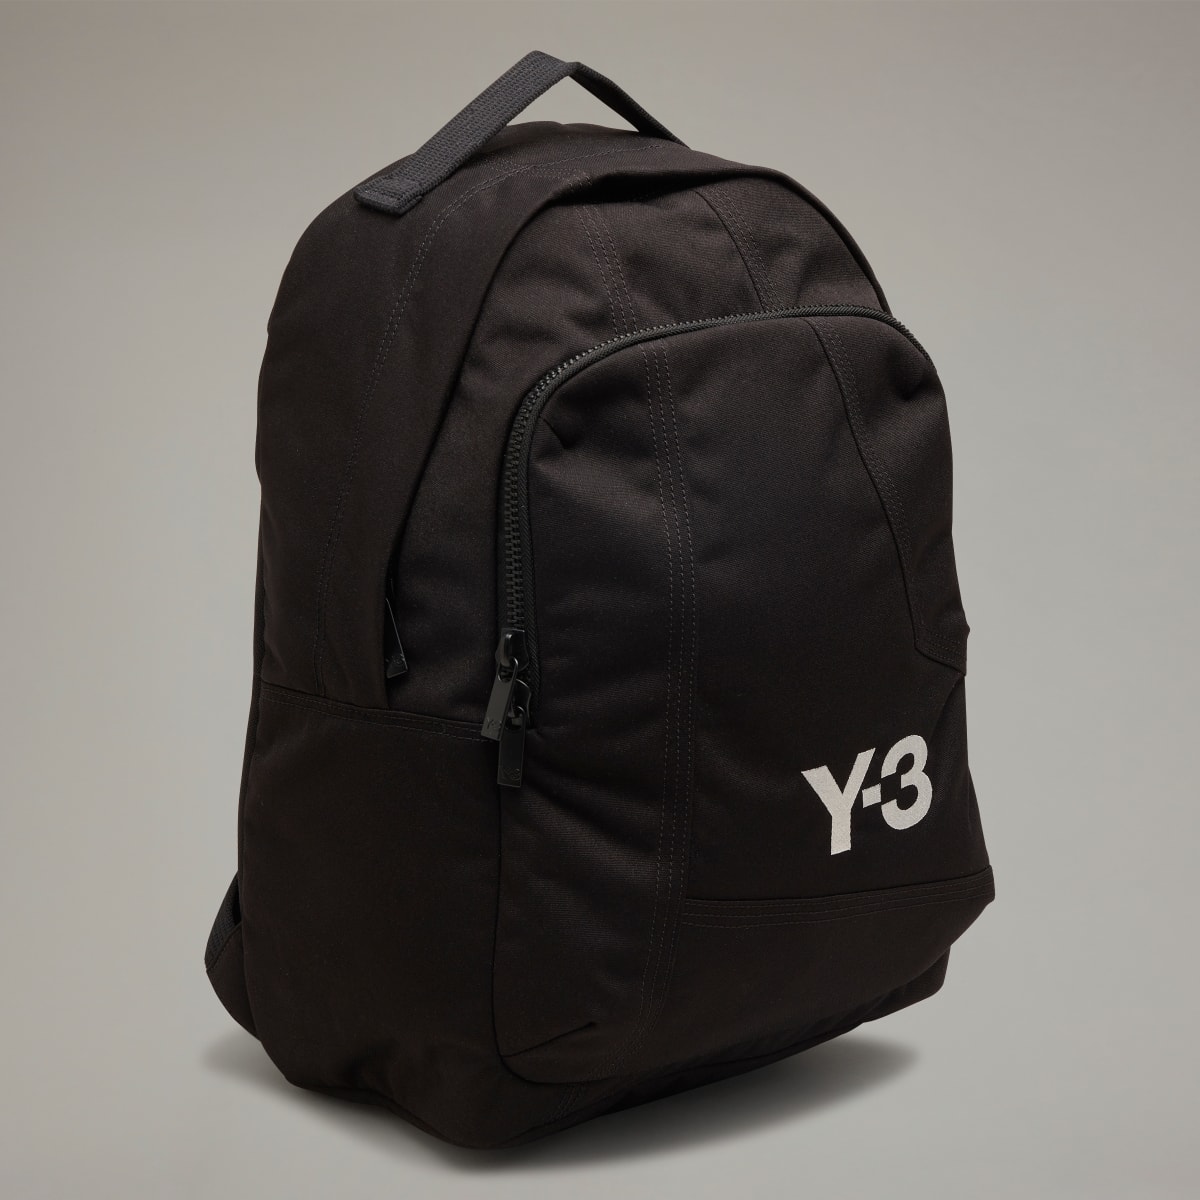 Adidas Y-3 Classic Backpack. 4